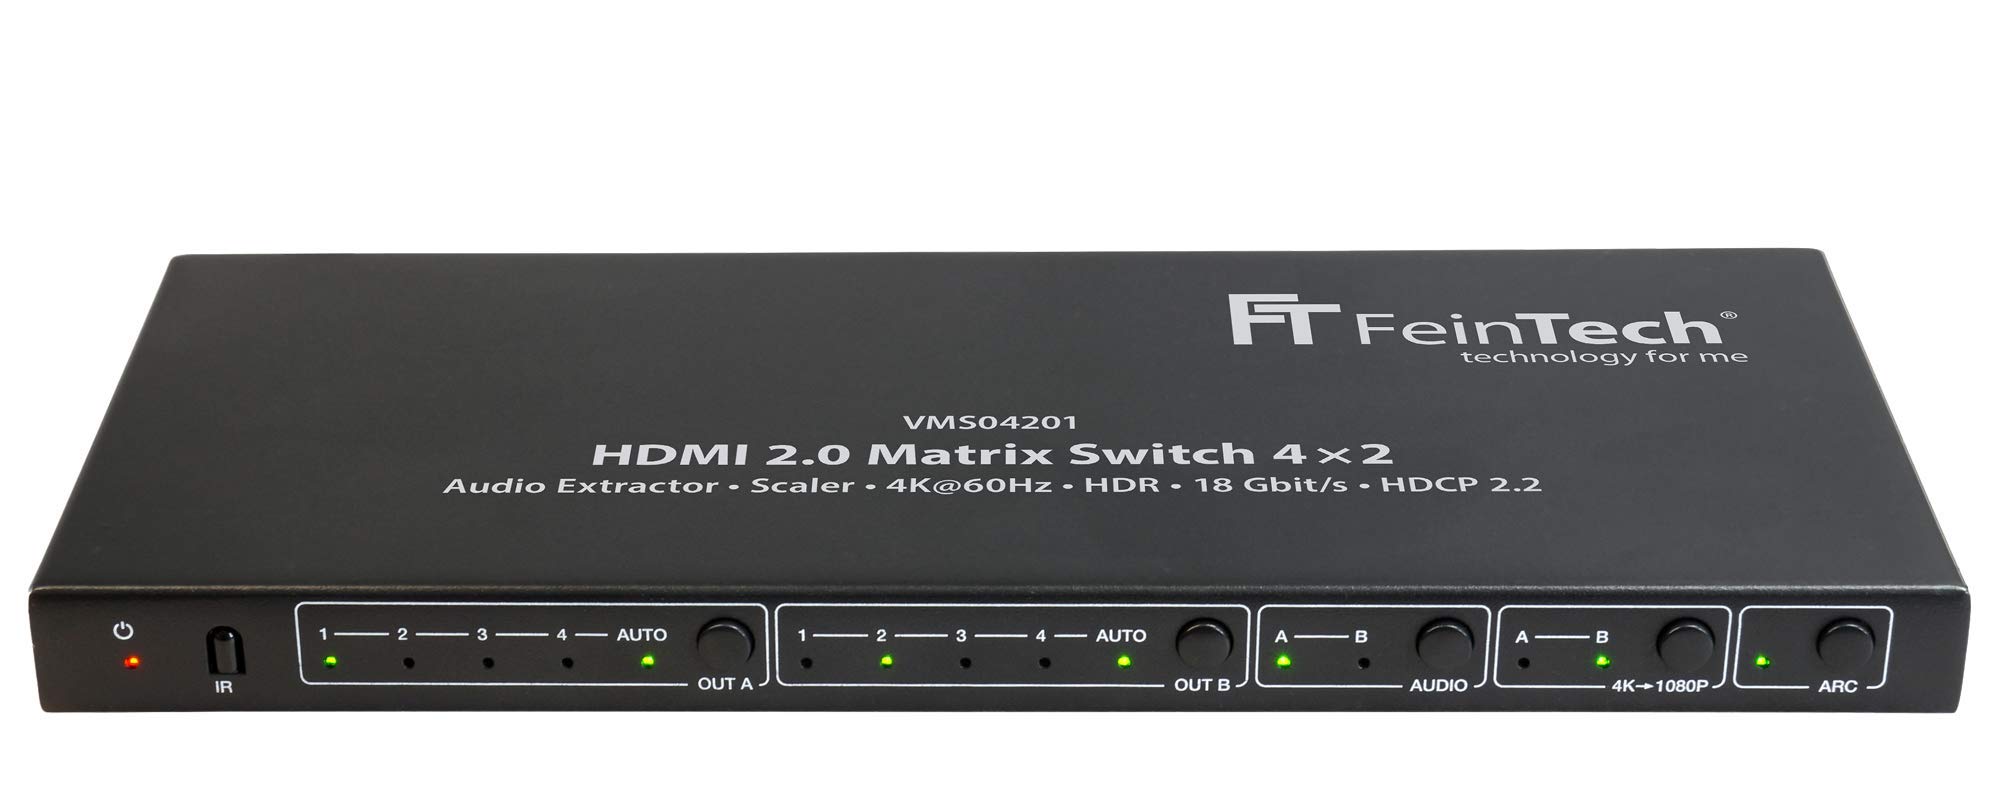 FeinTech VMS04201 HDMI Matrix Switch 4x2 mit Audio Extractor Scaler Ultra-HD 4K 60Hz HDR